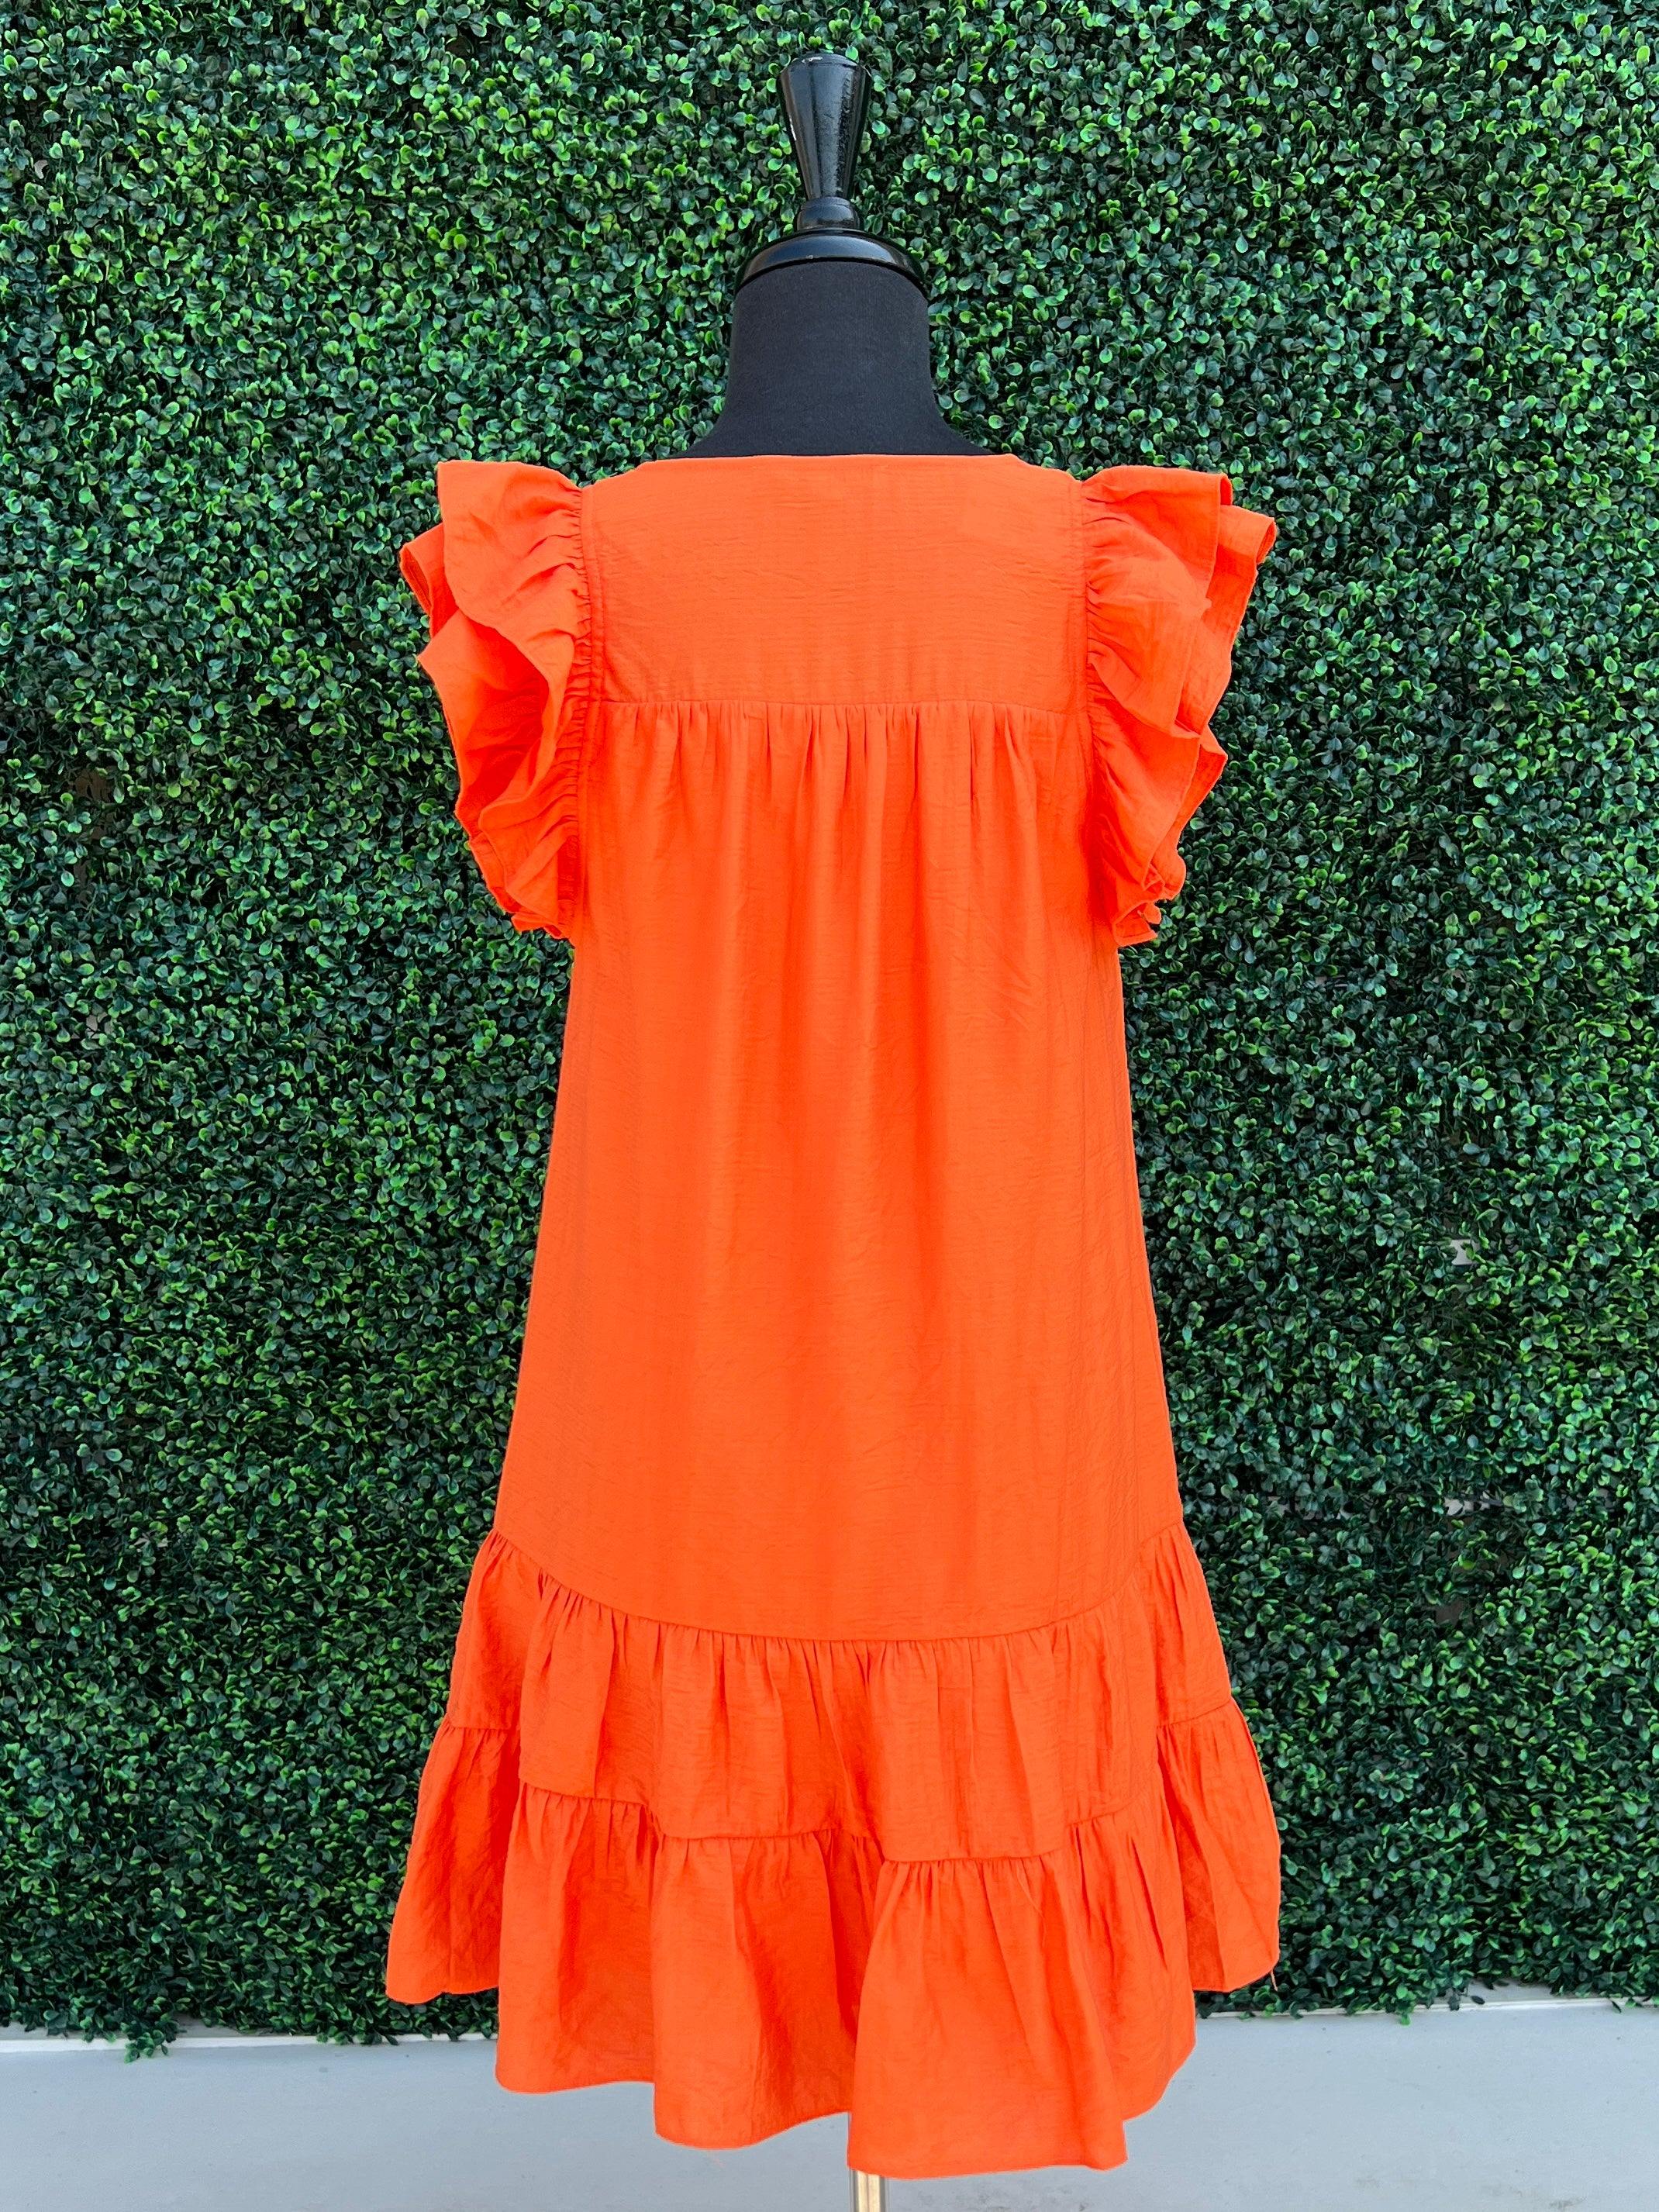 Women's Houston Astros Refried Apparel Orange/Navy Hoodie Dress